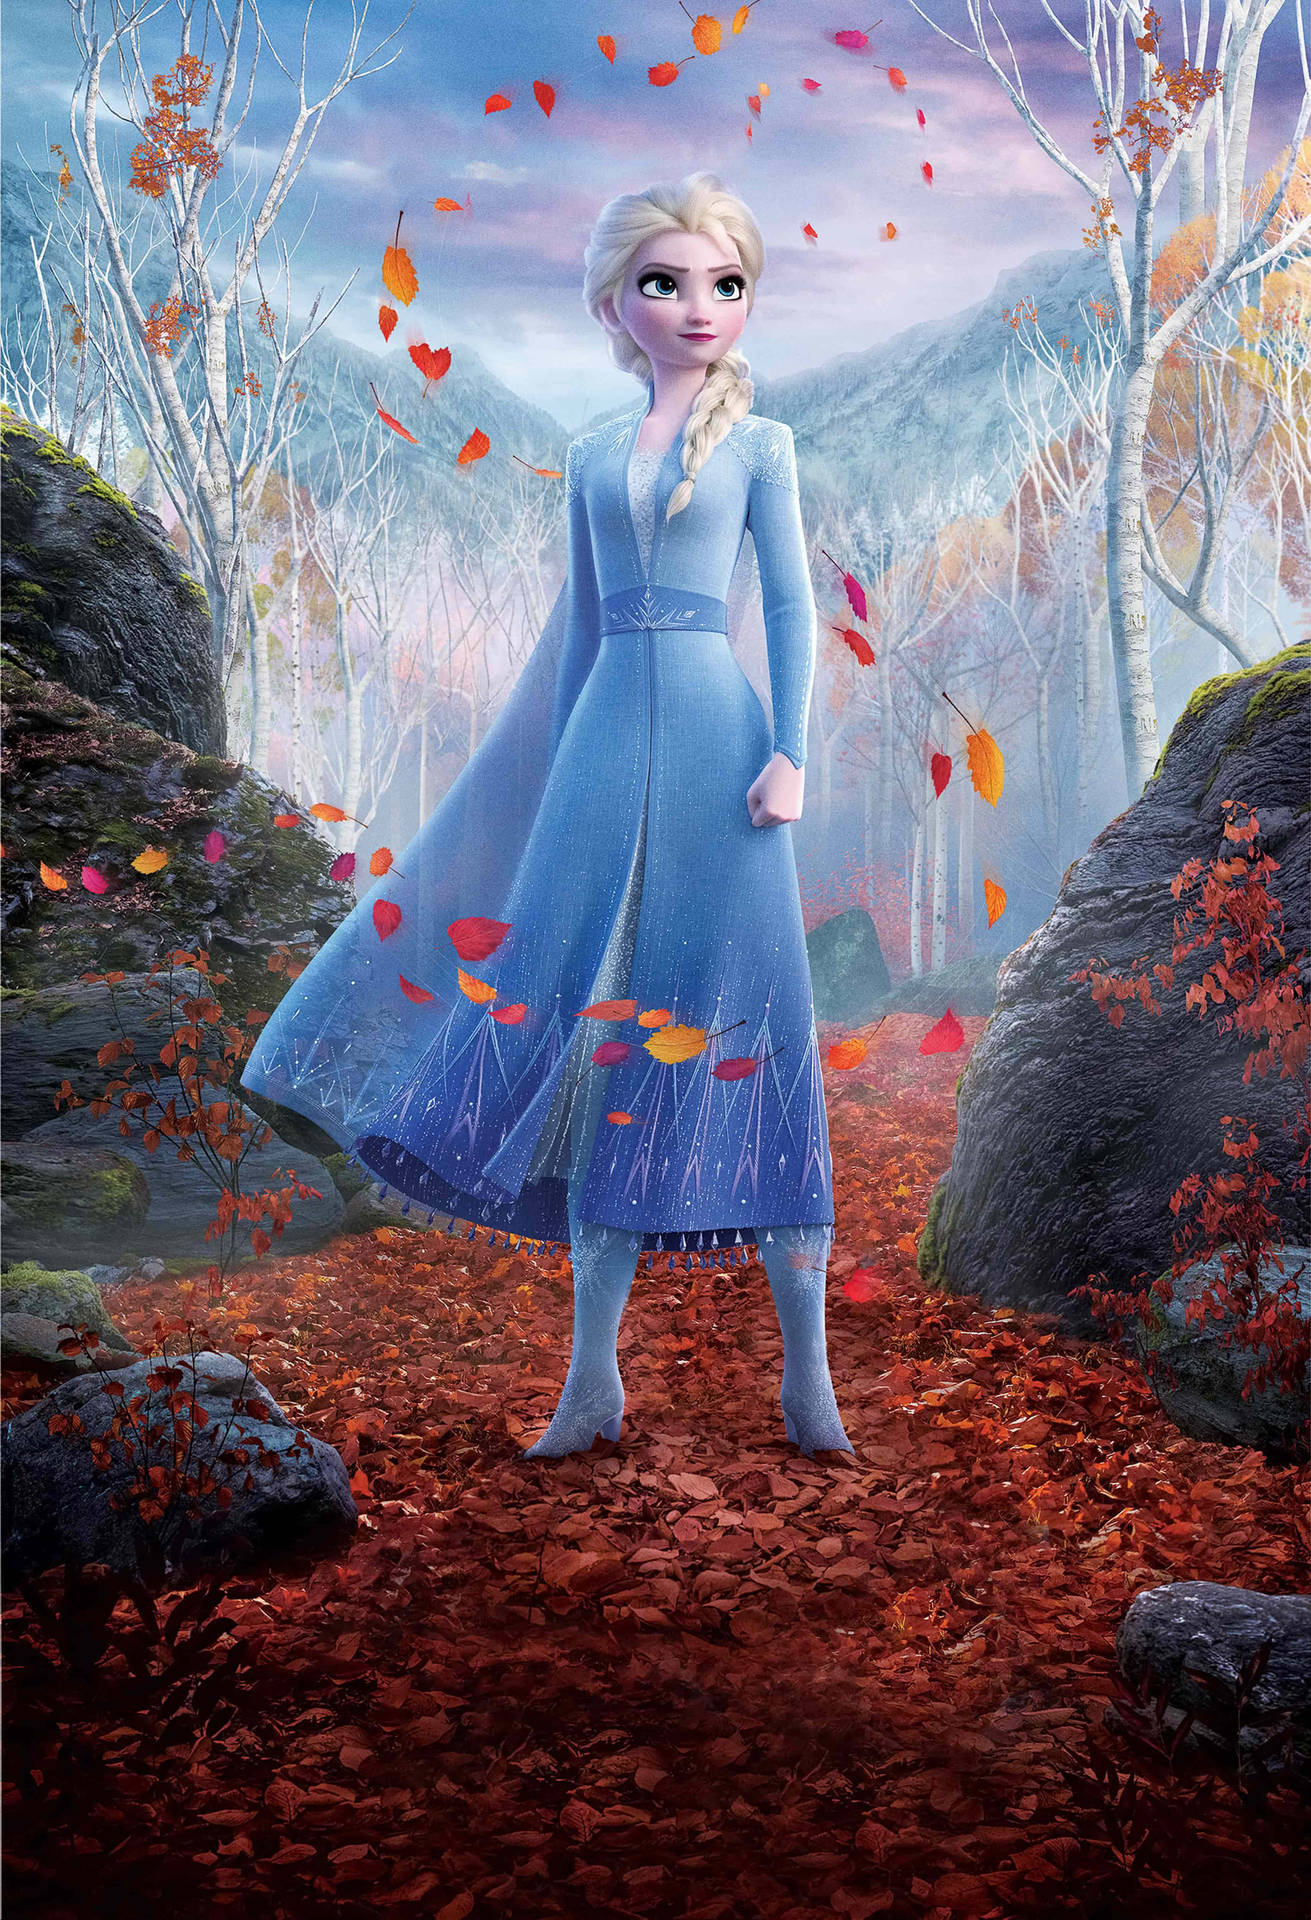 Disney Princess 3414X5000 Wallpaper and Background Image